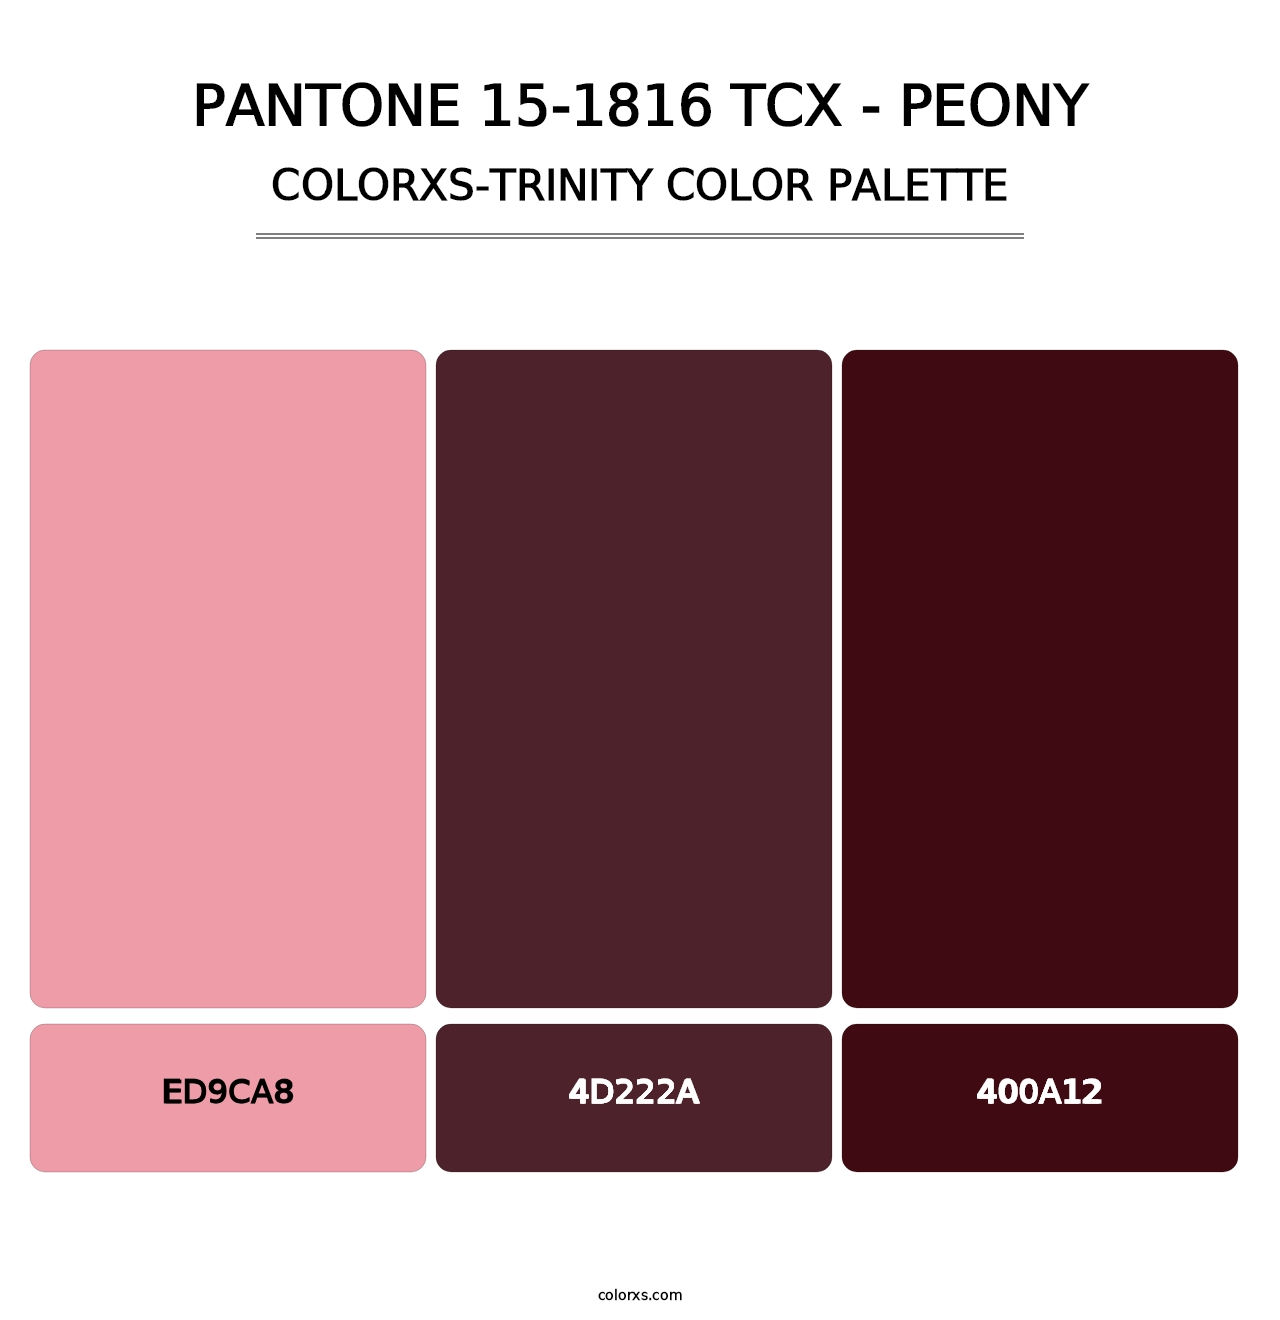 PANTONE 15-1816 TCX - Peony - Colorxs Trinity Palette